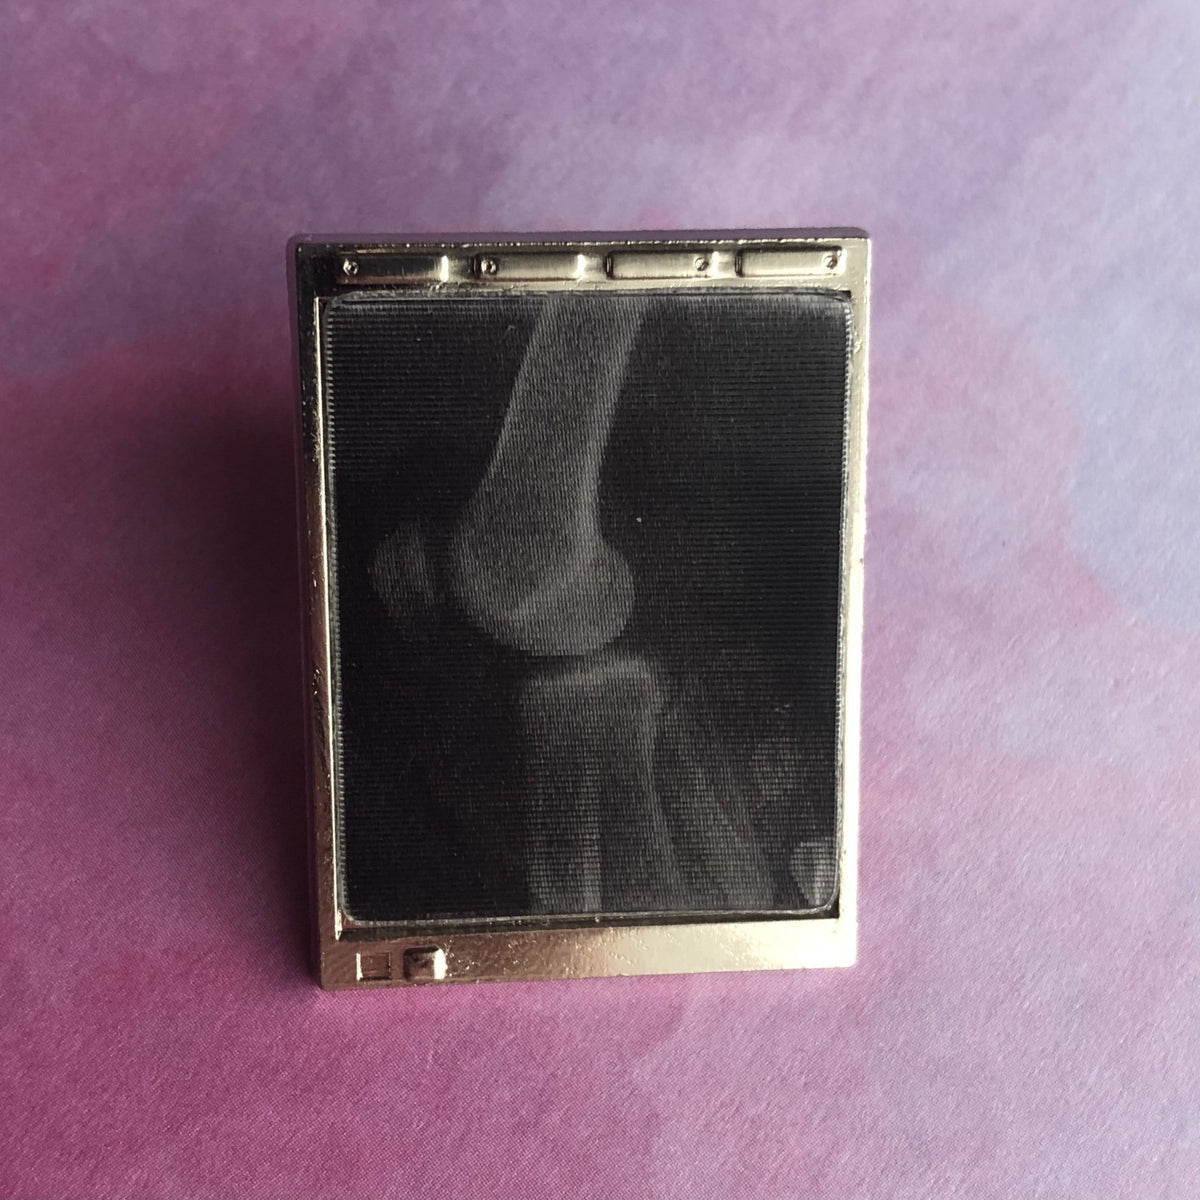 Lenticular Radiology Light Box Pin - Rad Tech Edition! - Rad Girl Creations